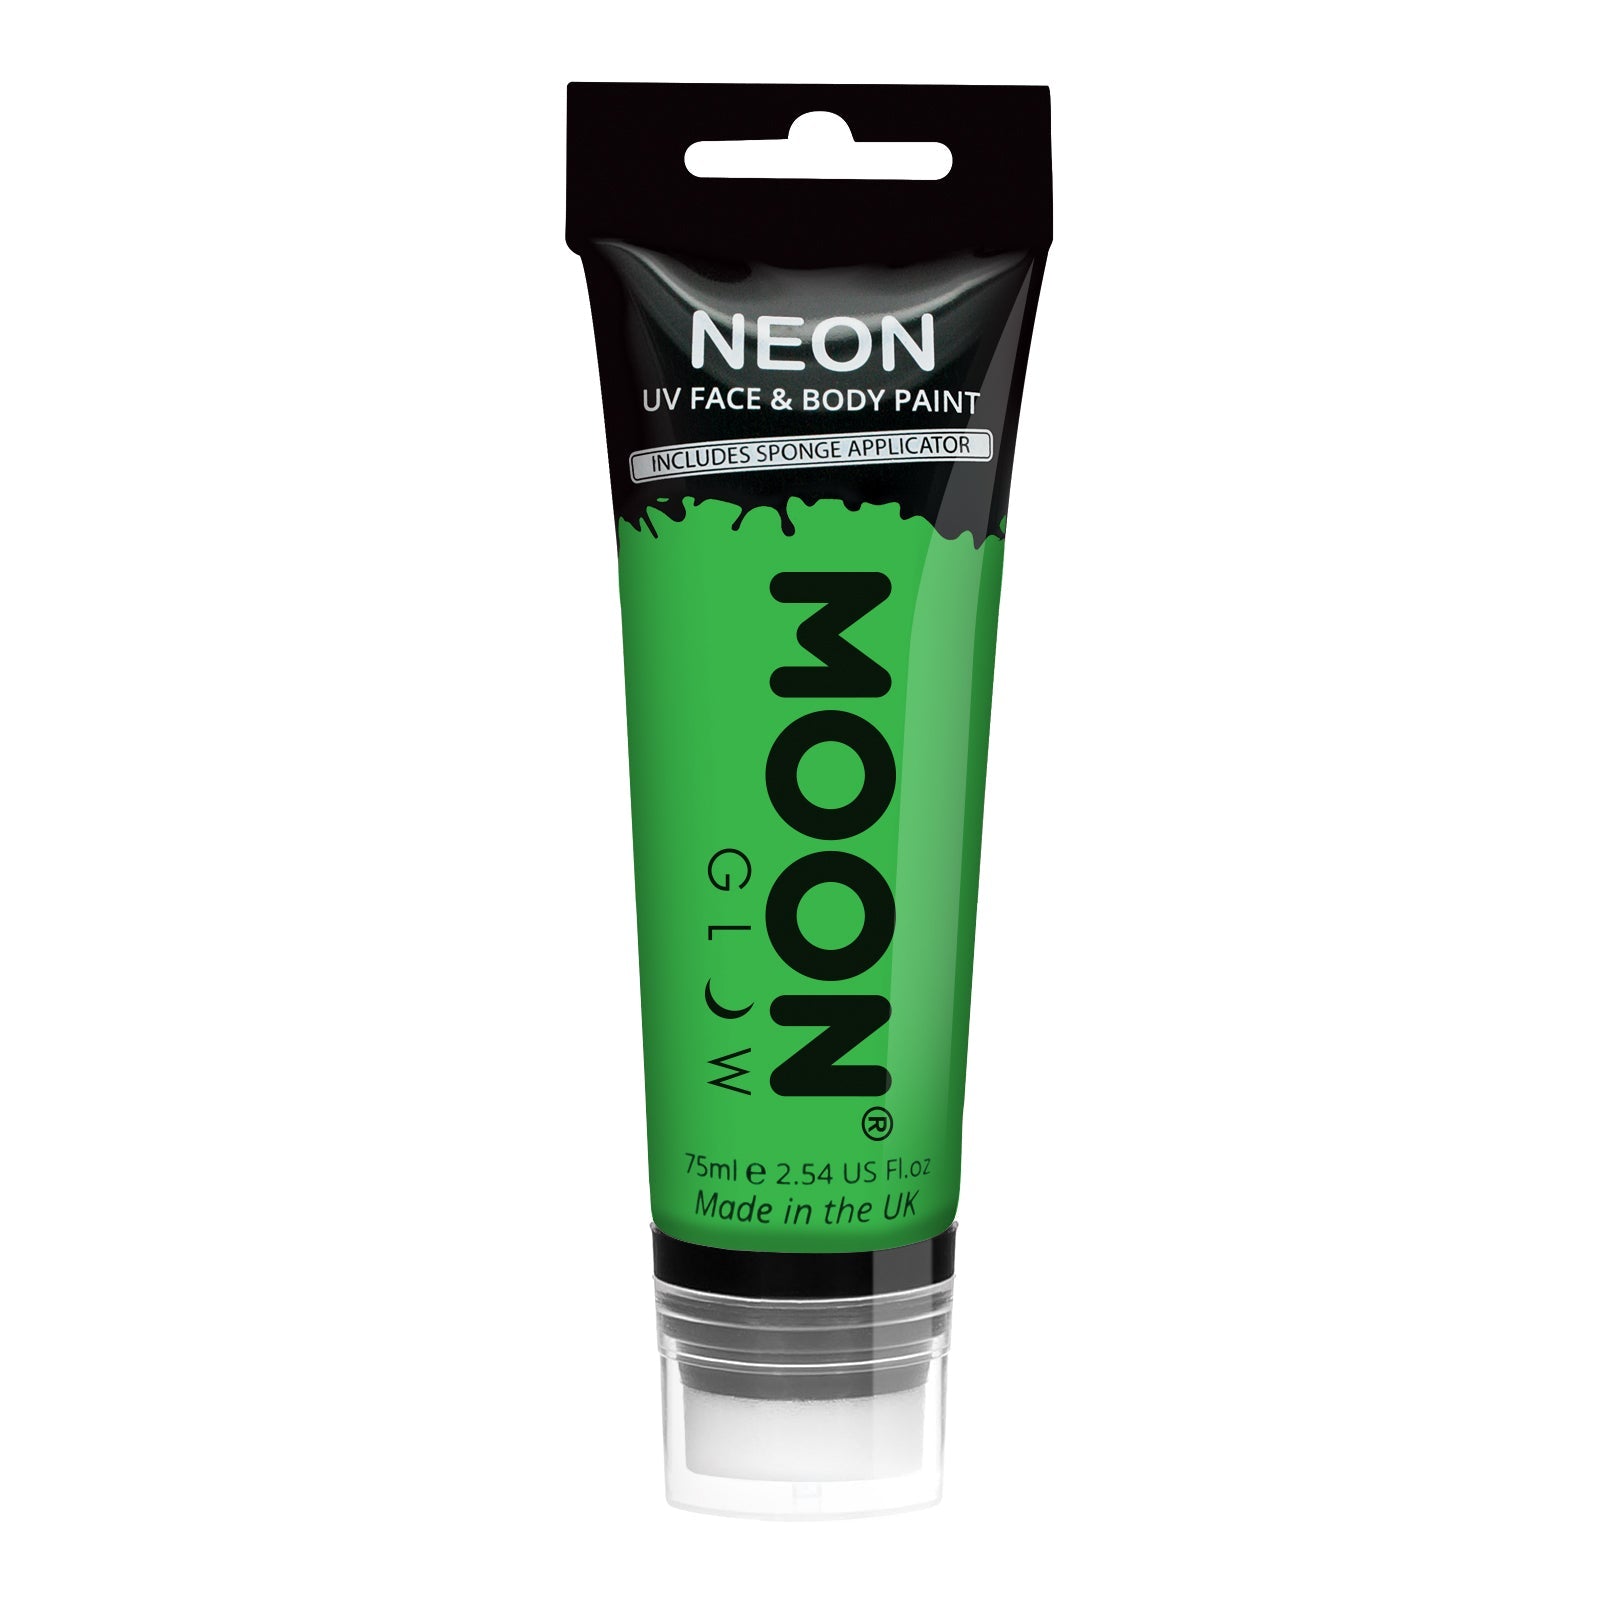 Intense Green - Neon UV Glow Blacklight Face Paint w/applicator, 75mL. Cosmetically certified, FDA & Health Canada compliant, cruelty free and vegan.